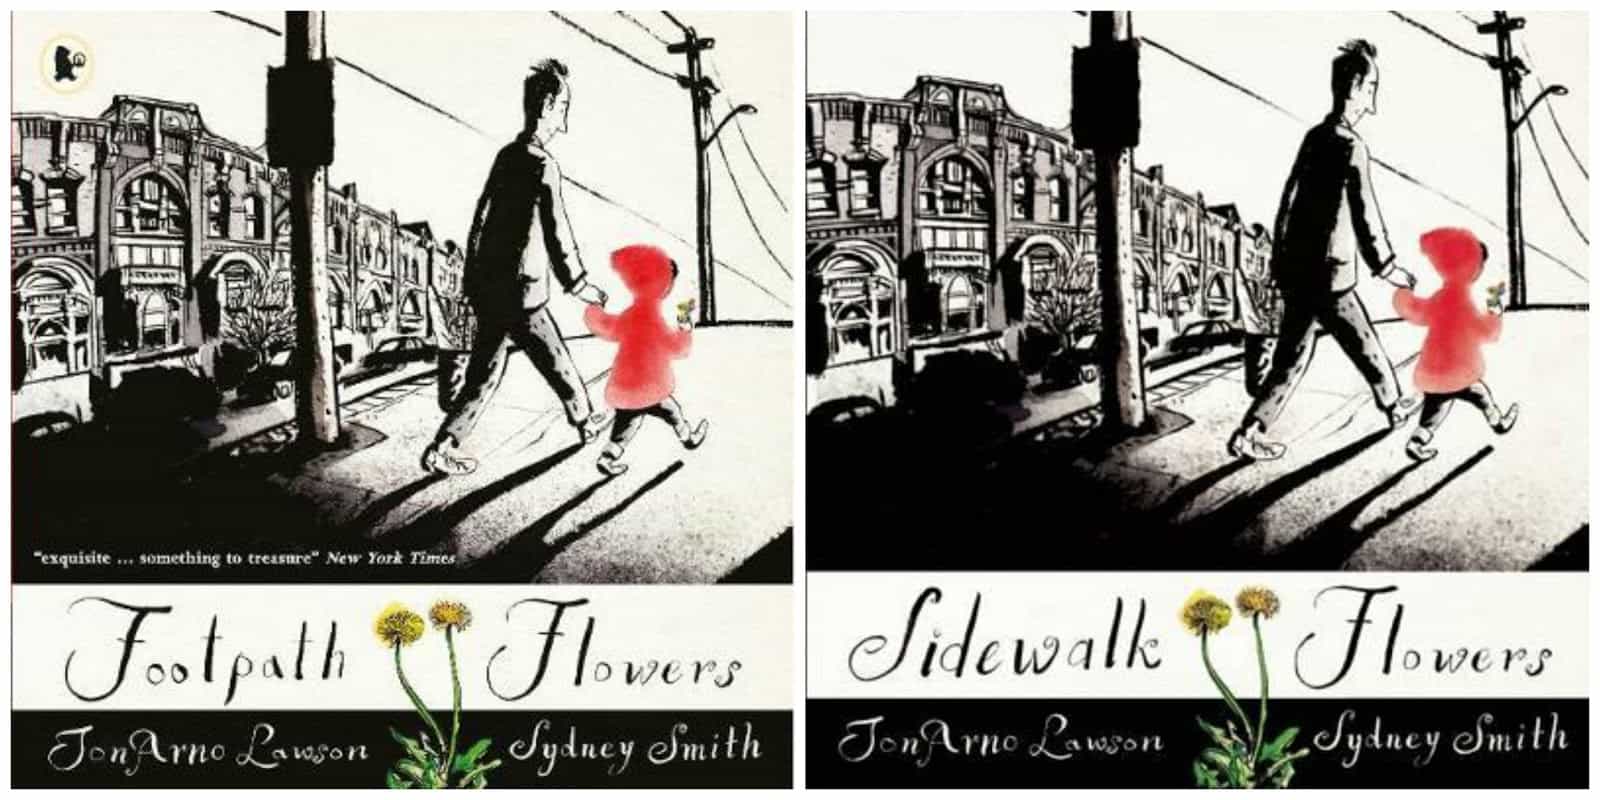 Sidewalk Flowers by Lawson and Smith